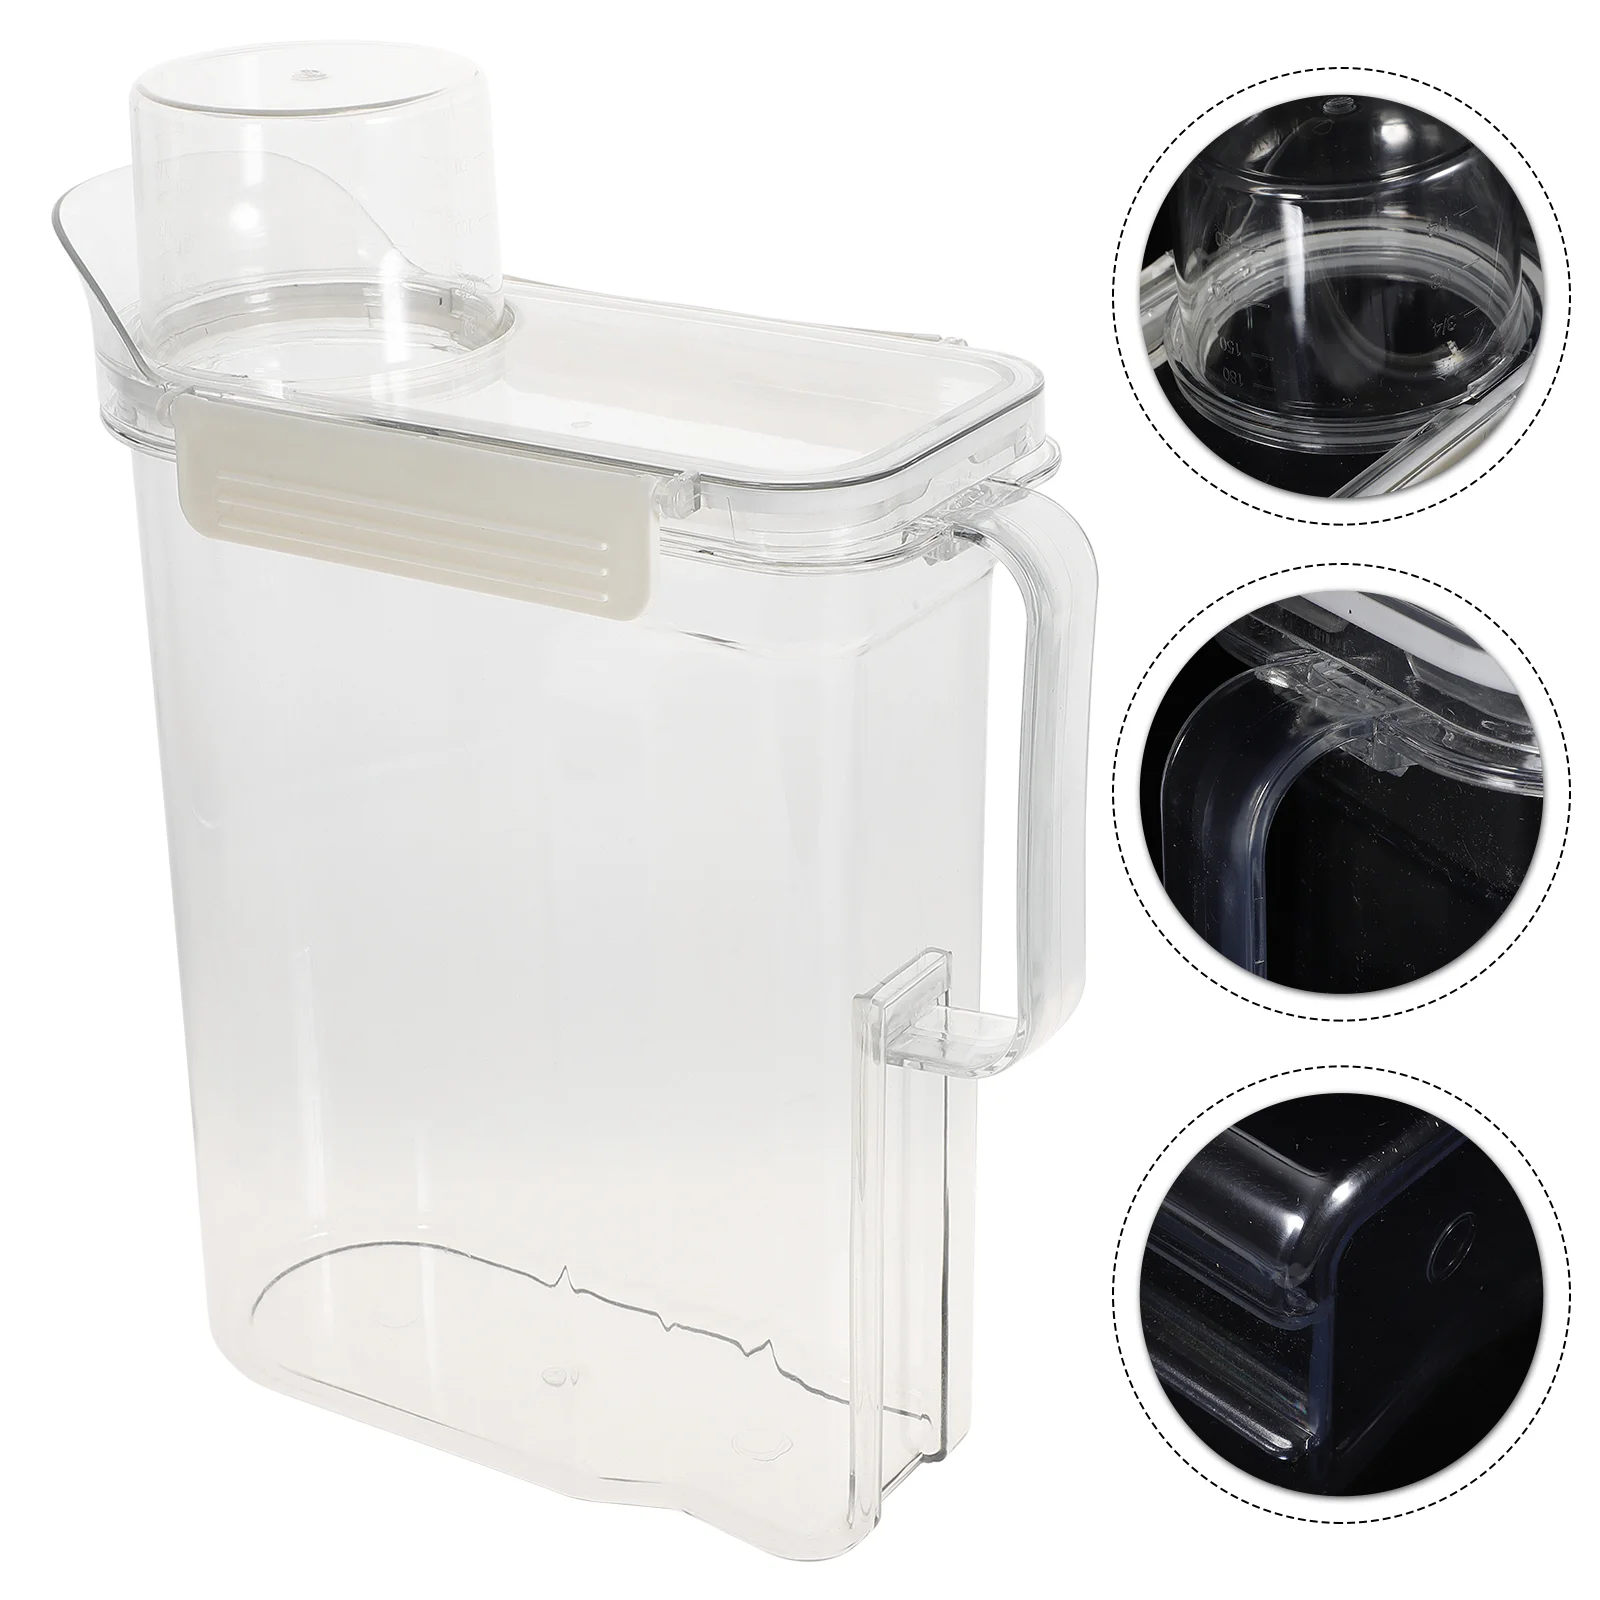 

Laundry Detergent Container Dispenser Holder Sub Bucket Soap Bottle Lotion Box Guest Essentials Bathroom Storage Washing Beads